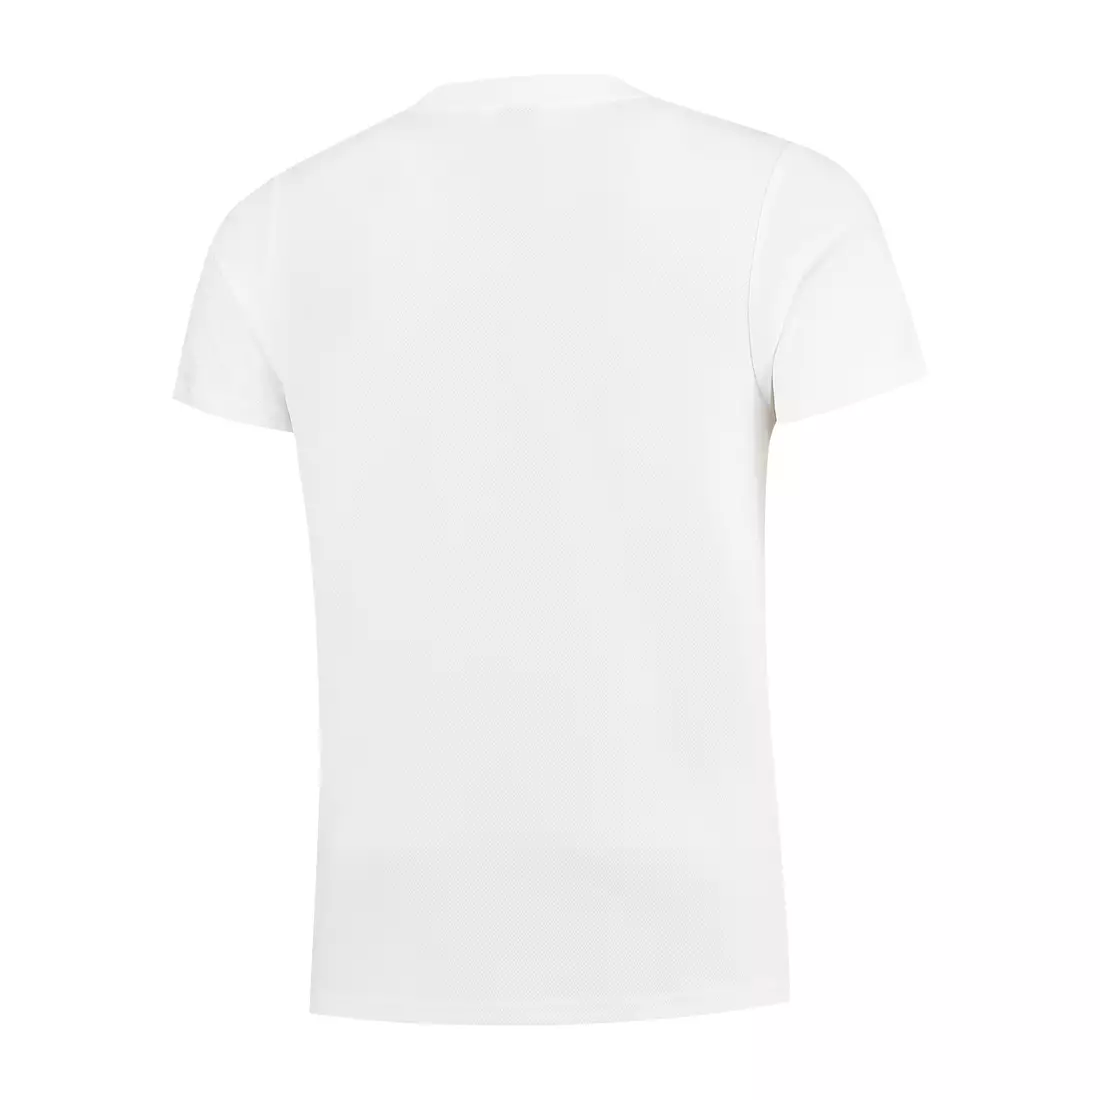 ROGELL running t-shirt PROMO white 800.220